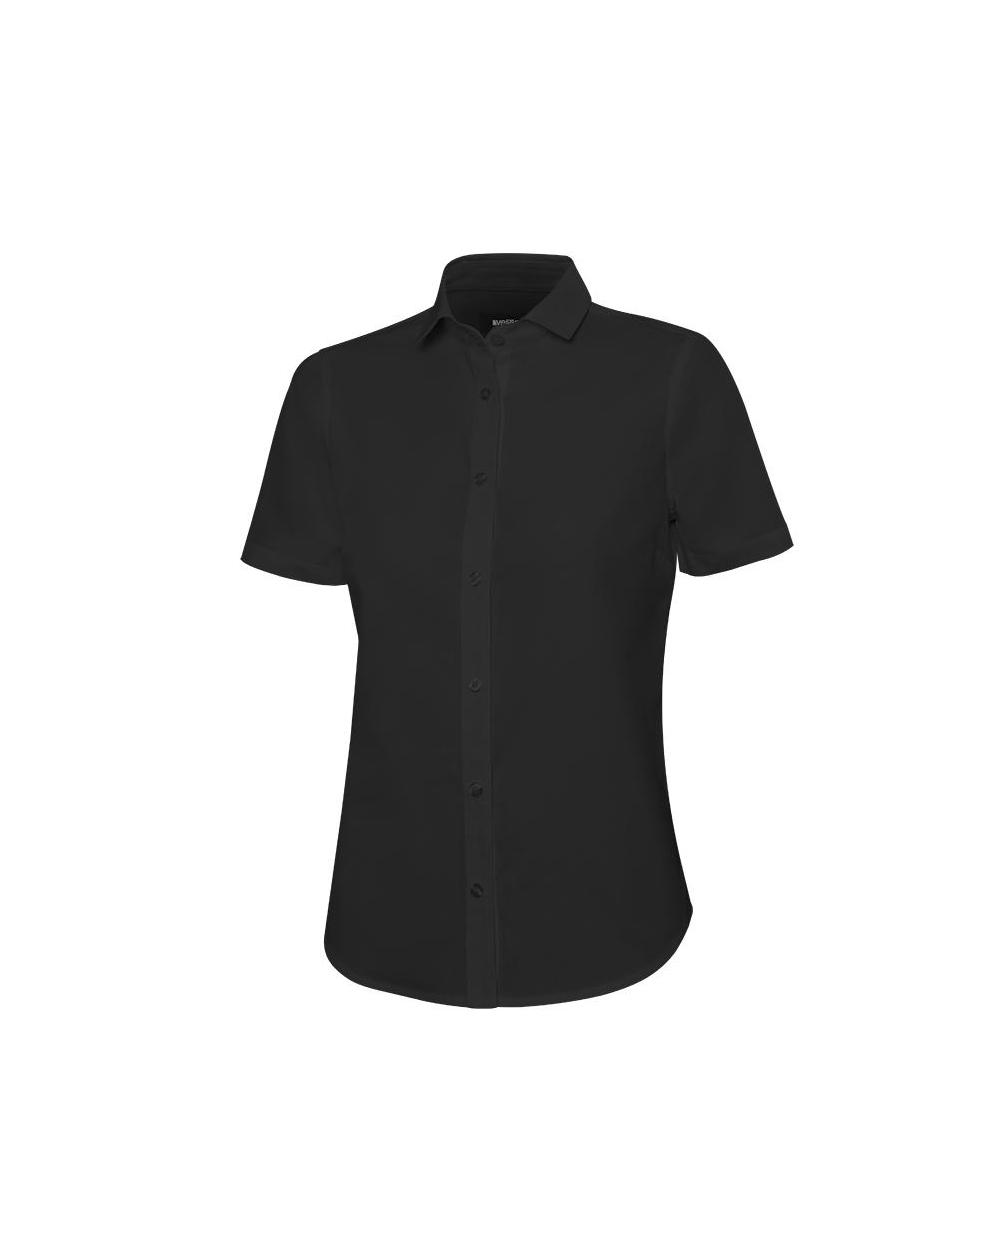 Comprar Camisa manga corta mujer serie 405010 online barato Negro